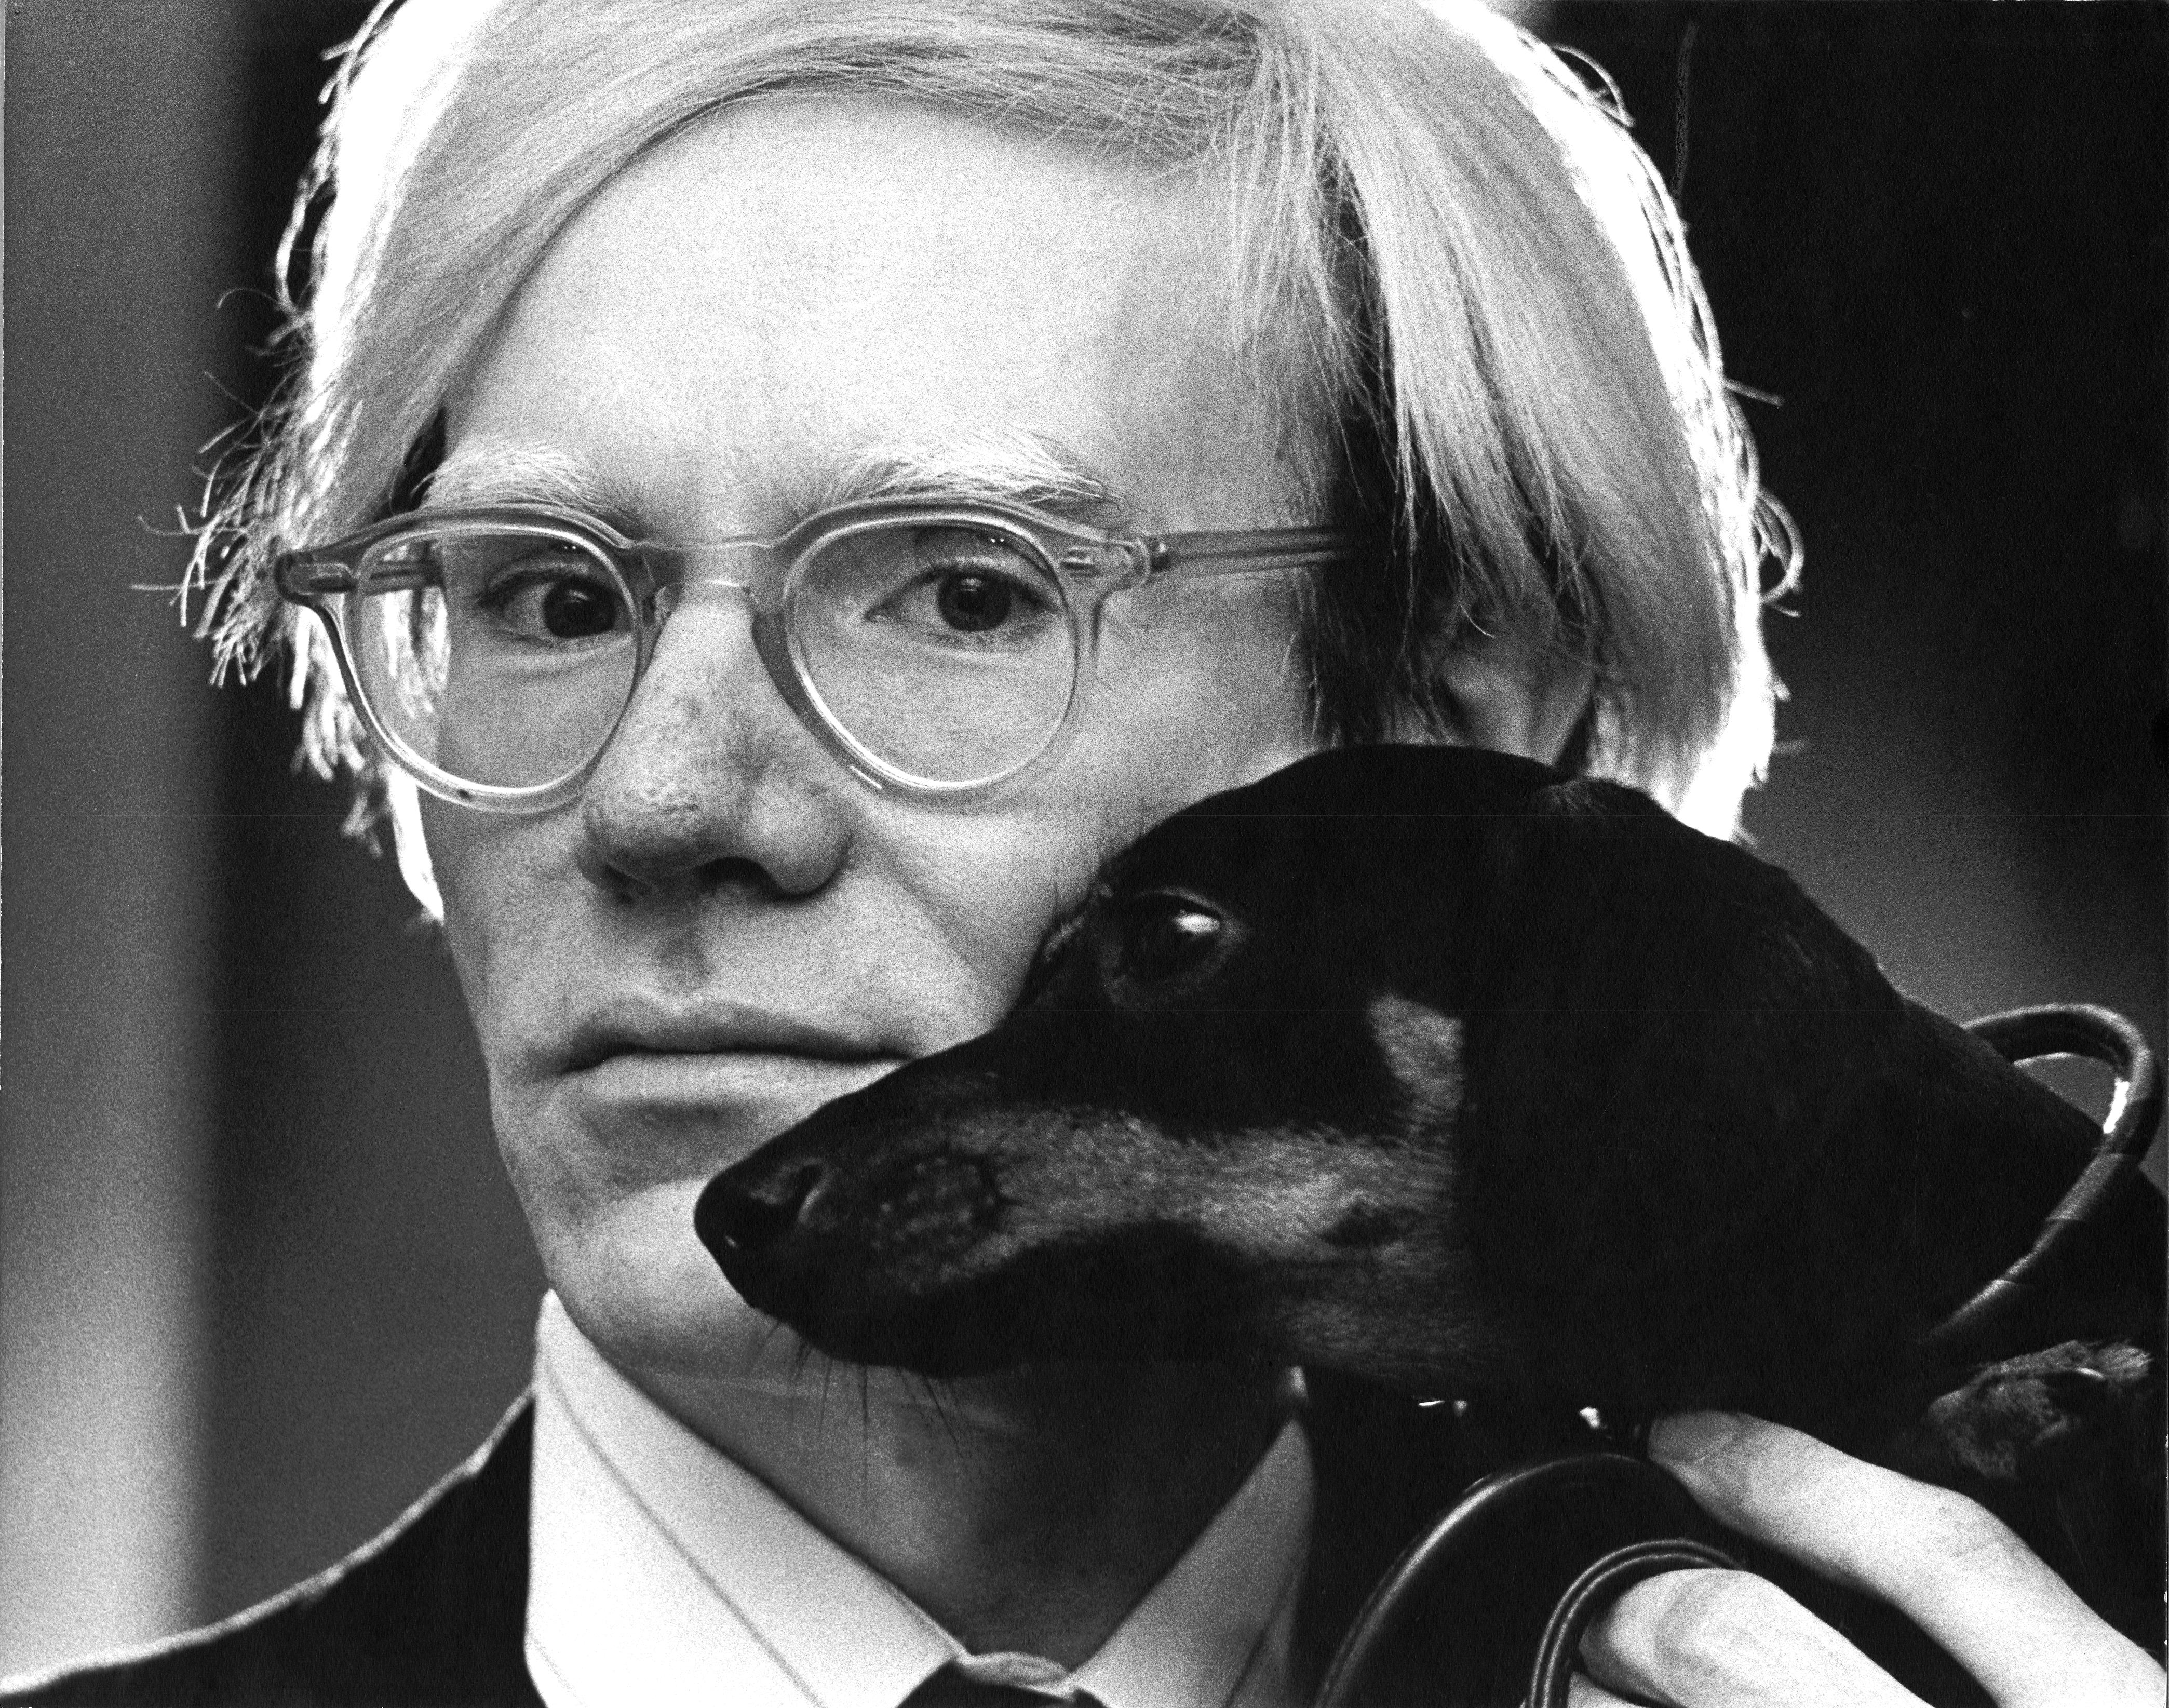 Jack Mitchell Portrait Photograph - Andy Warhol & his beloved dachshund Archie